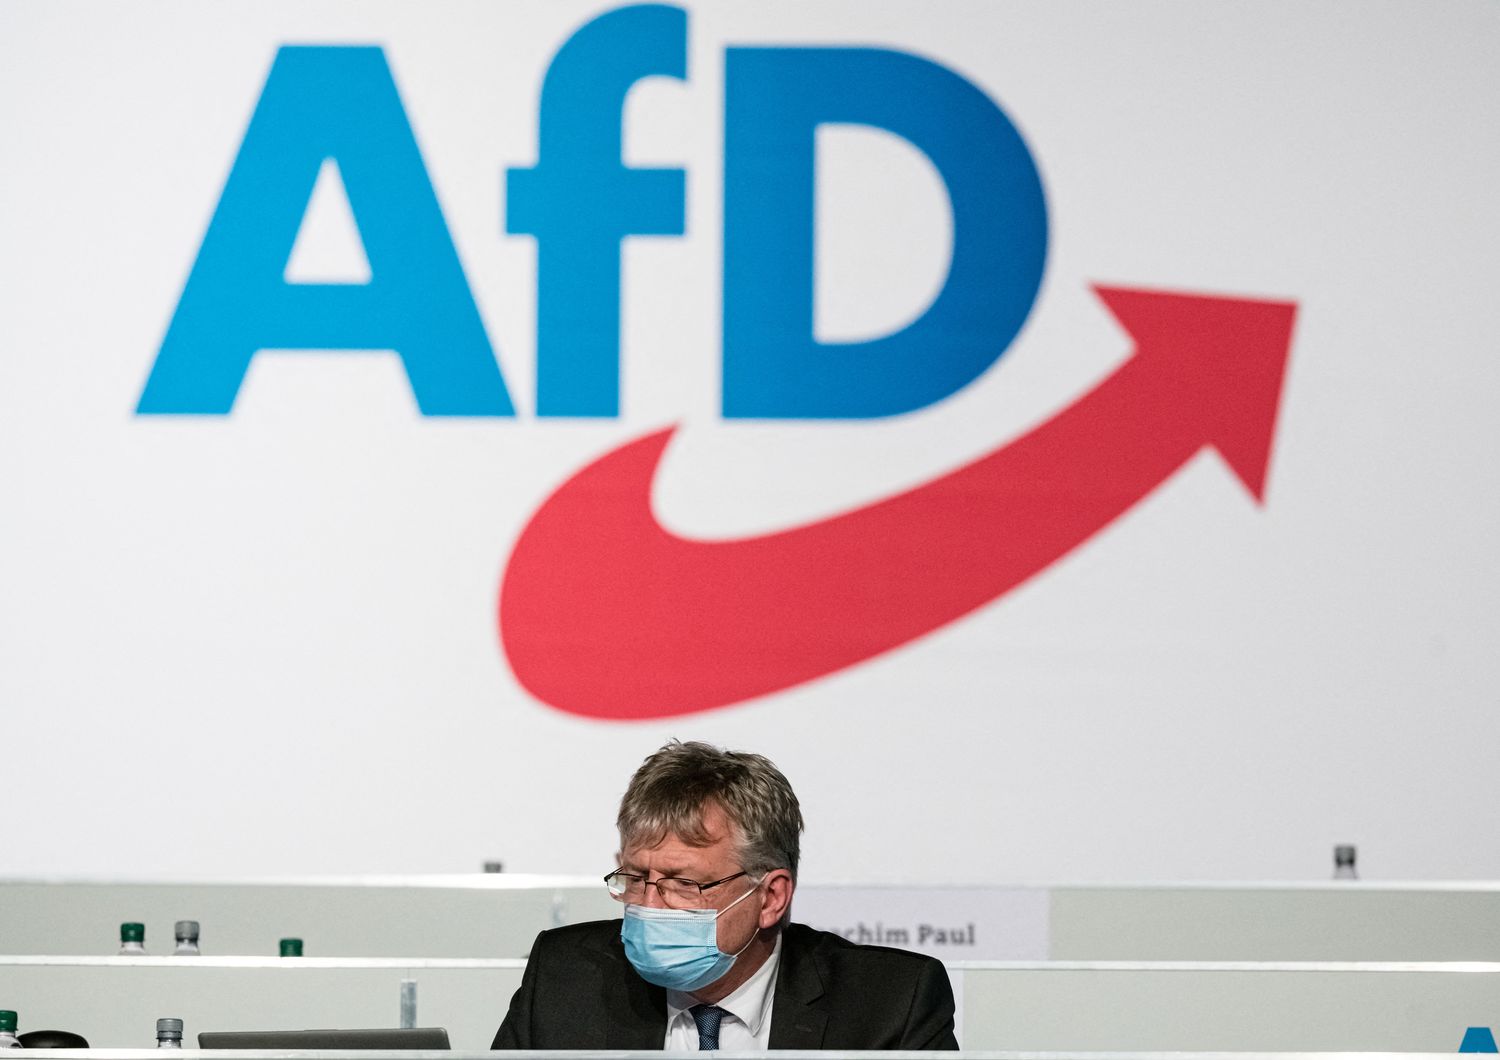 Il leader dell'Afd, Joerg Meuthen